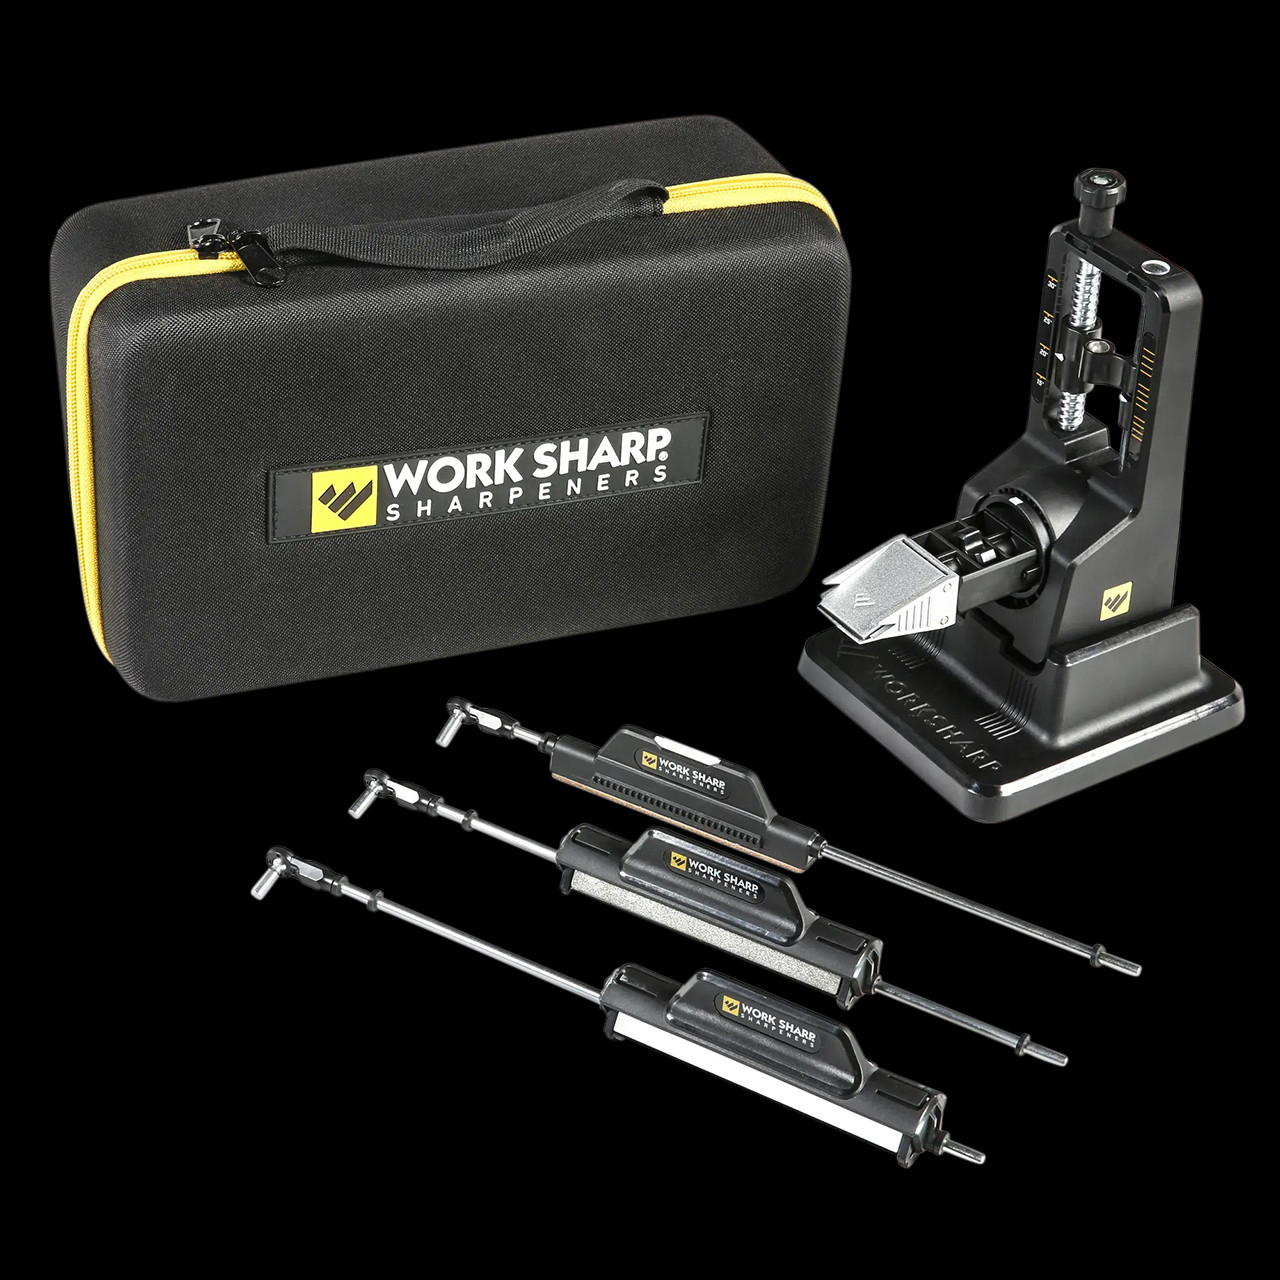 New: Work Sharp Professional Precision Adjust sharpening system